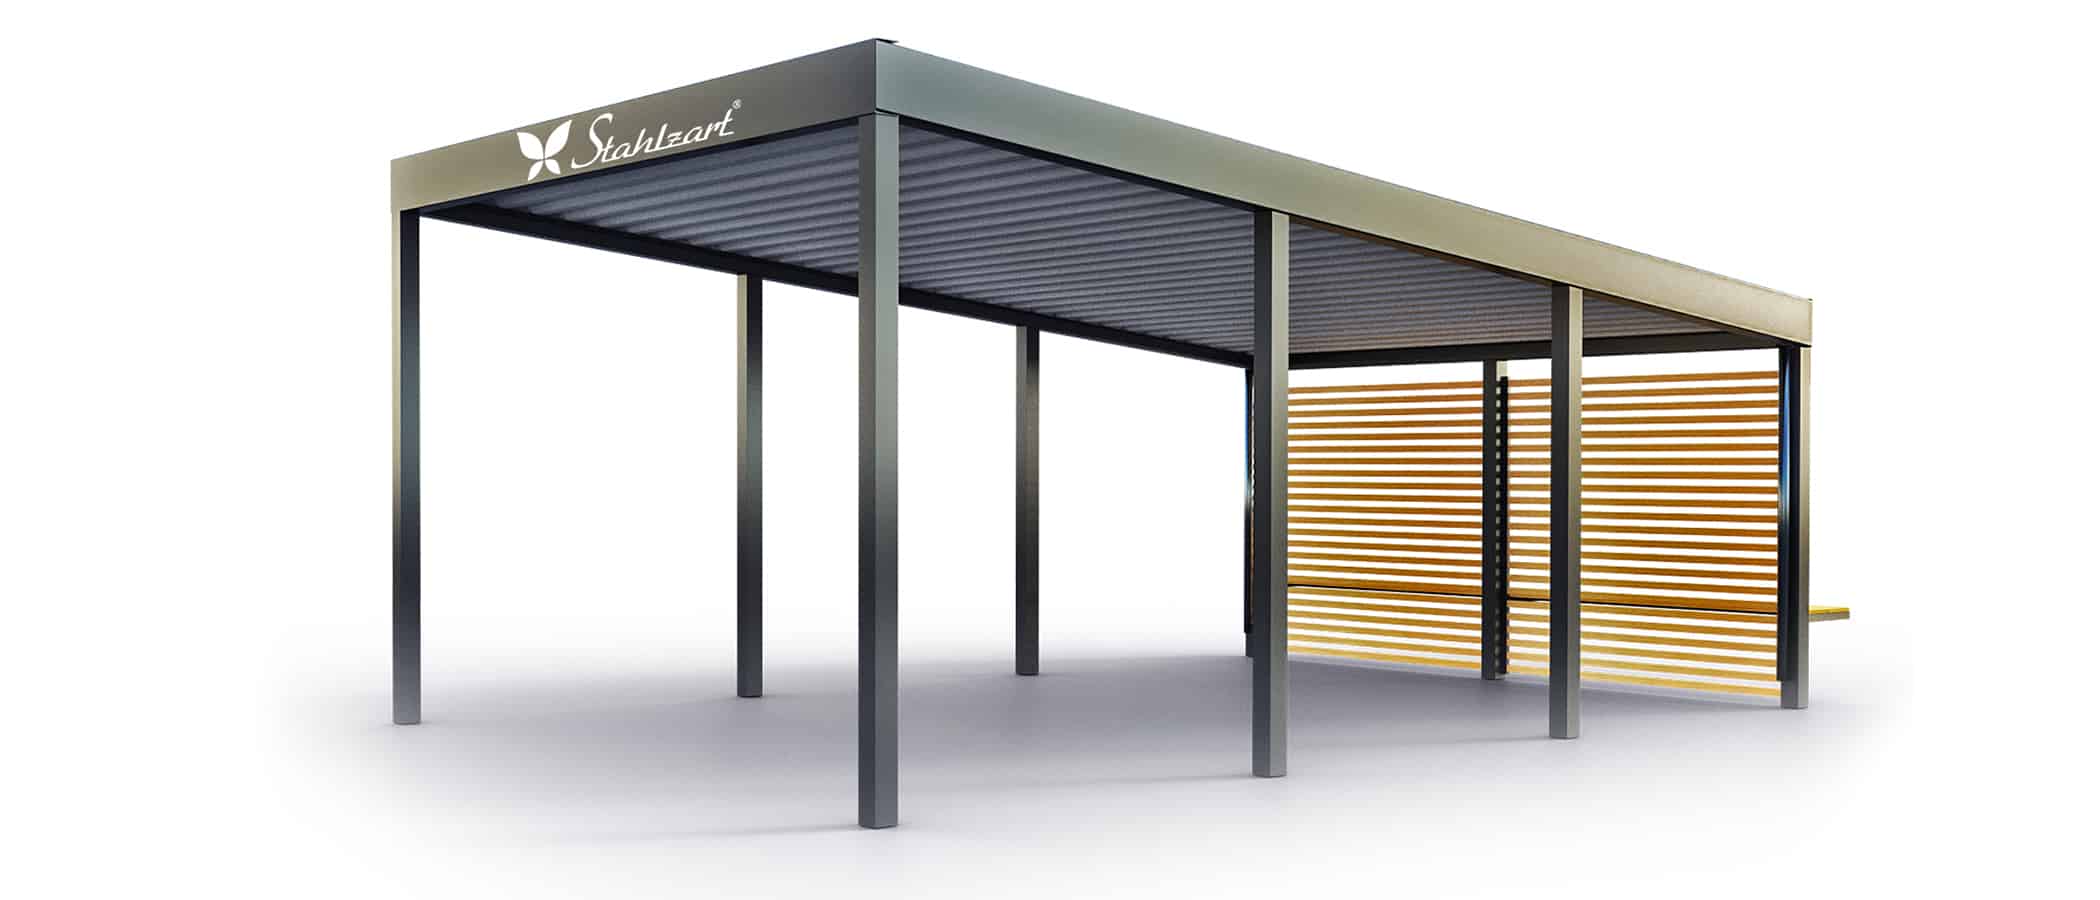 solar-carport-mit-pultdach-carports-solarcarport-pultdach-carportdach-design-strom-angebot-photovoltaikanlage-module-solardach-metall-stahl-stahlcarport-holz-verkleidung-sitzbank-stahlzart